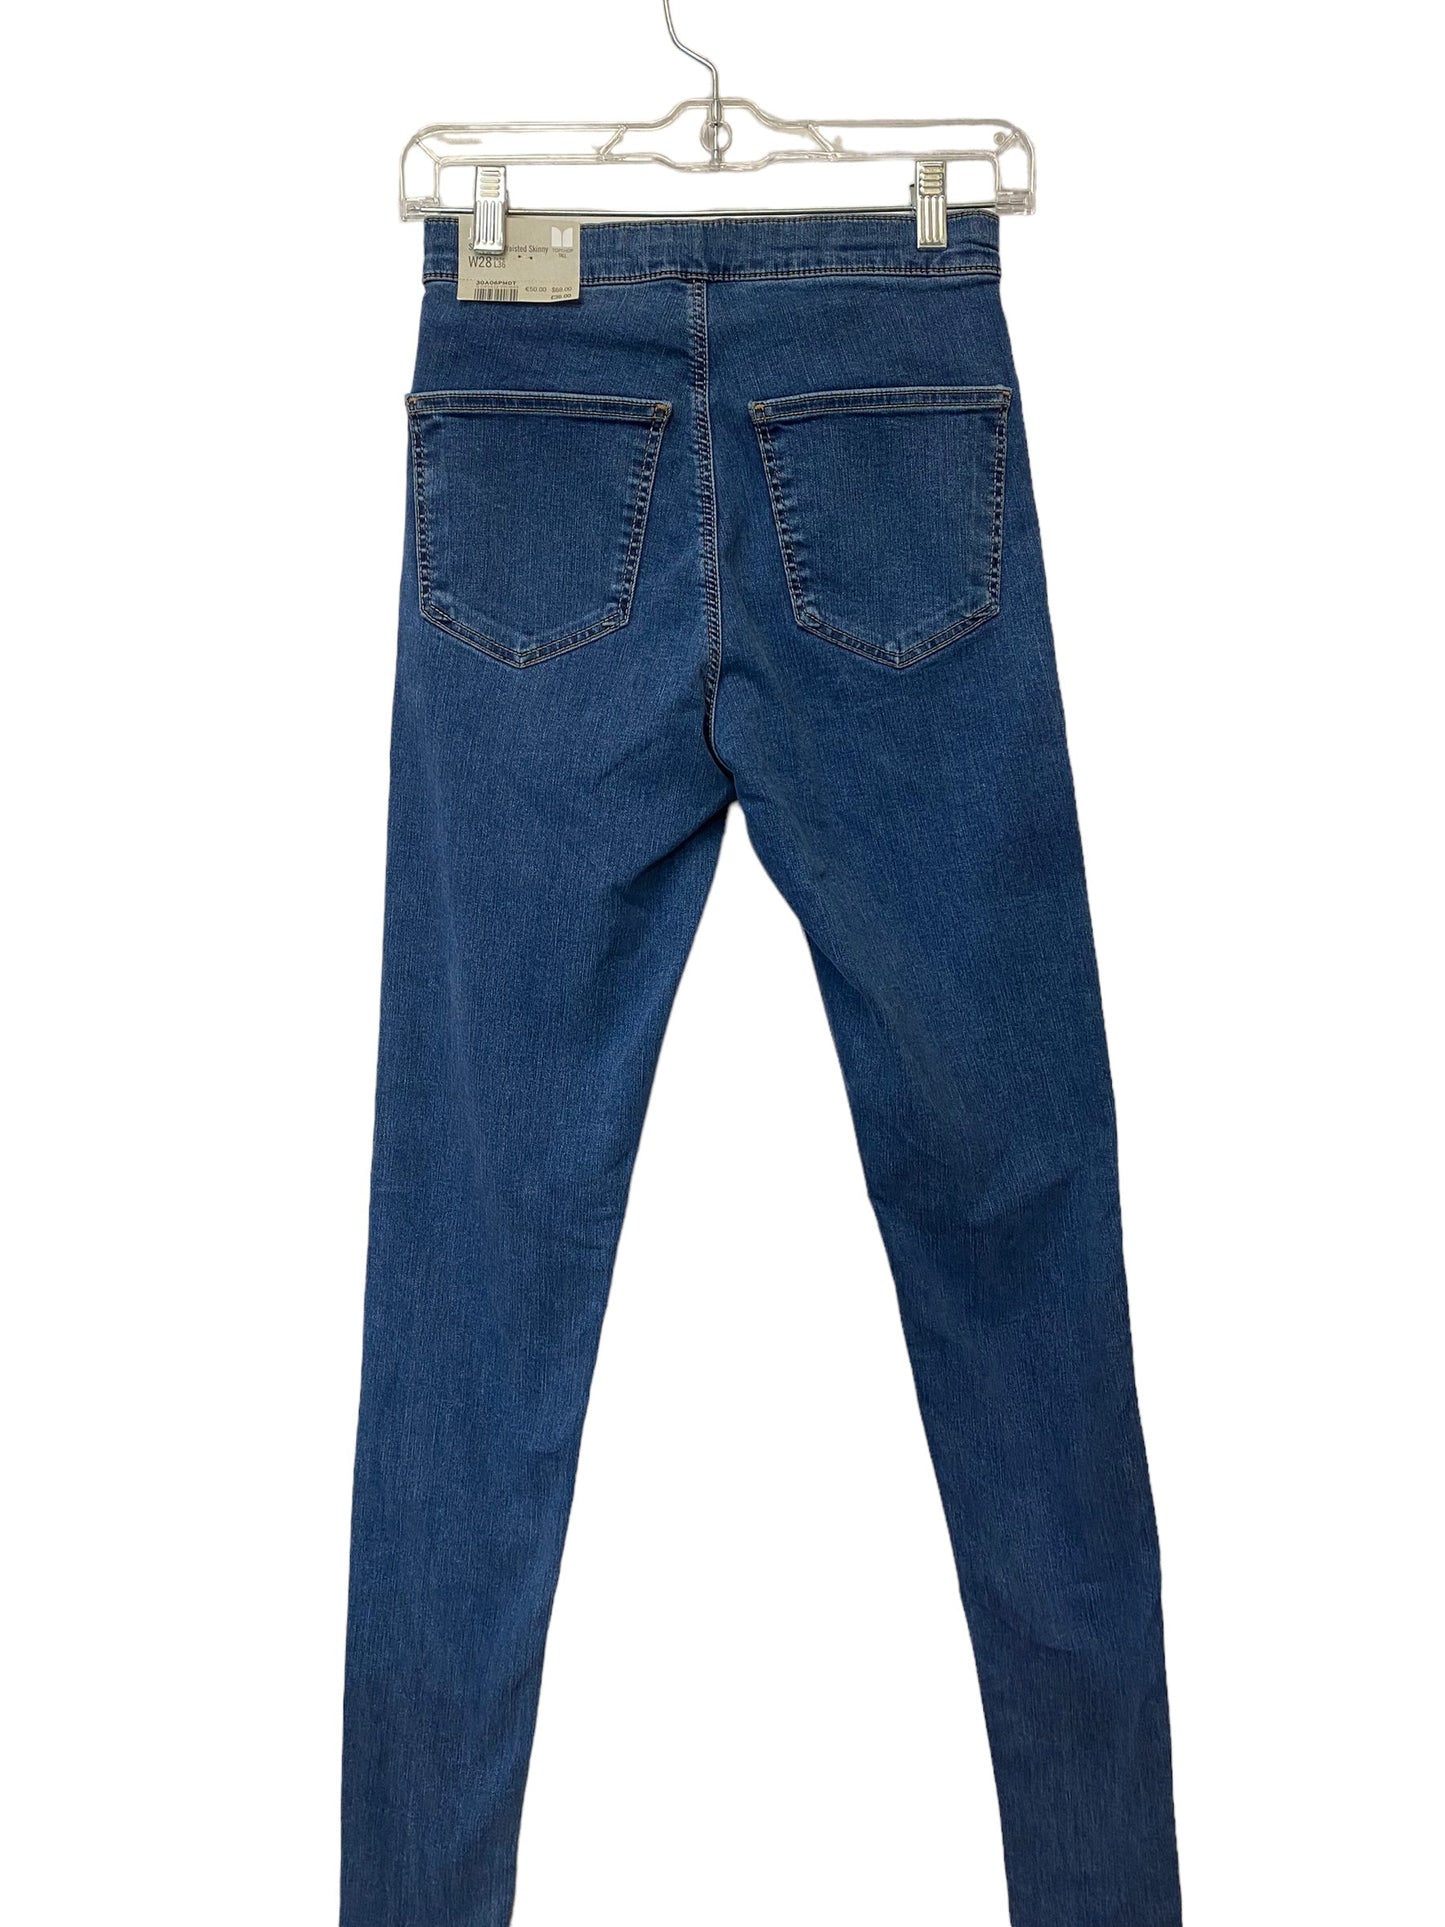 Jeans Skinny By Top Shop  Size: 28w